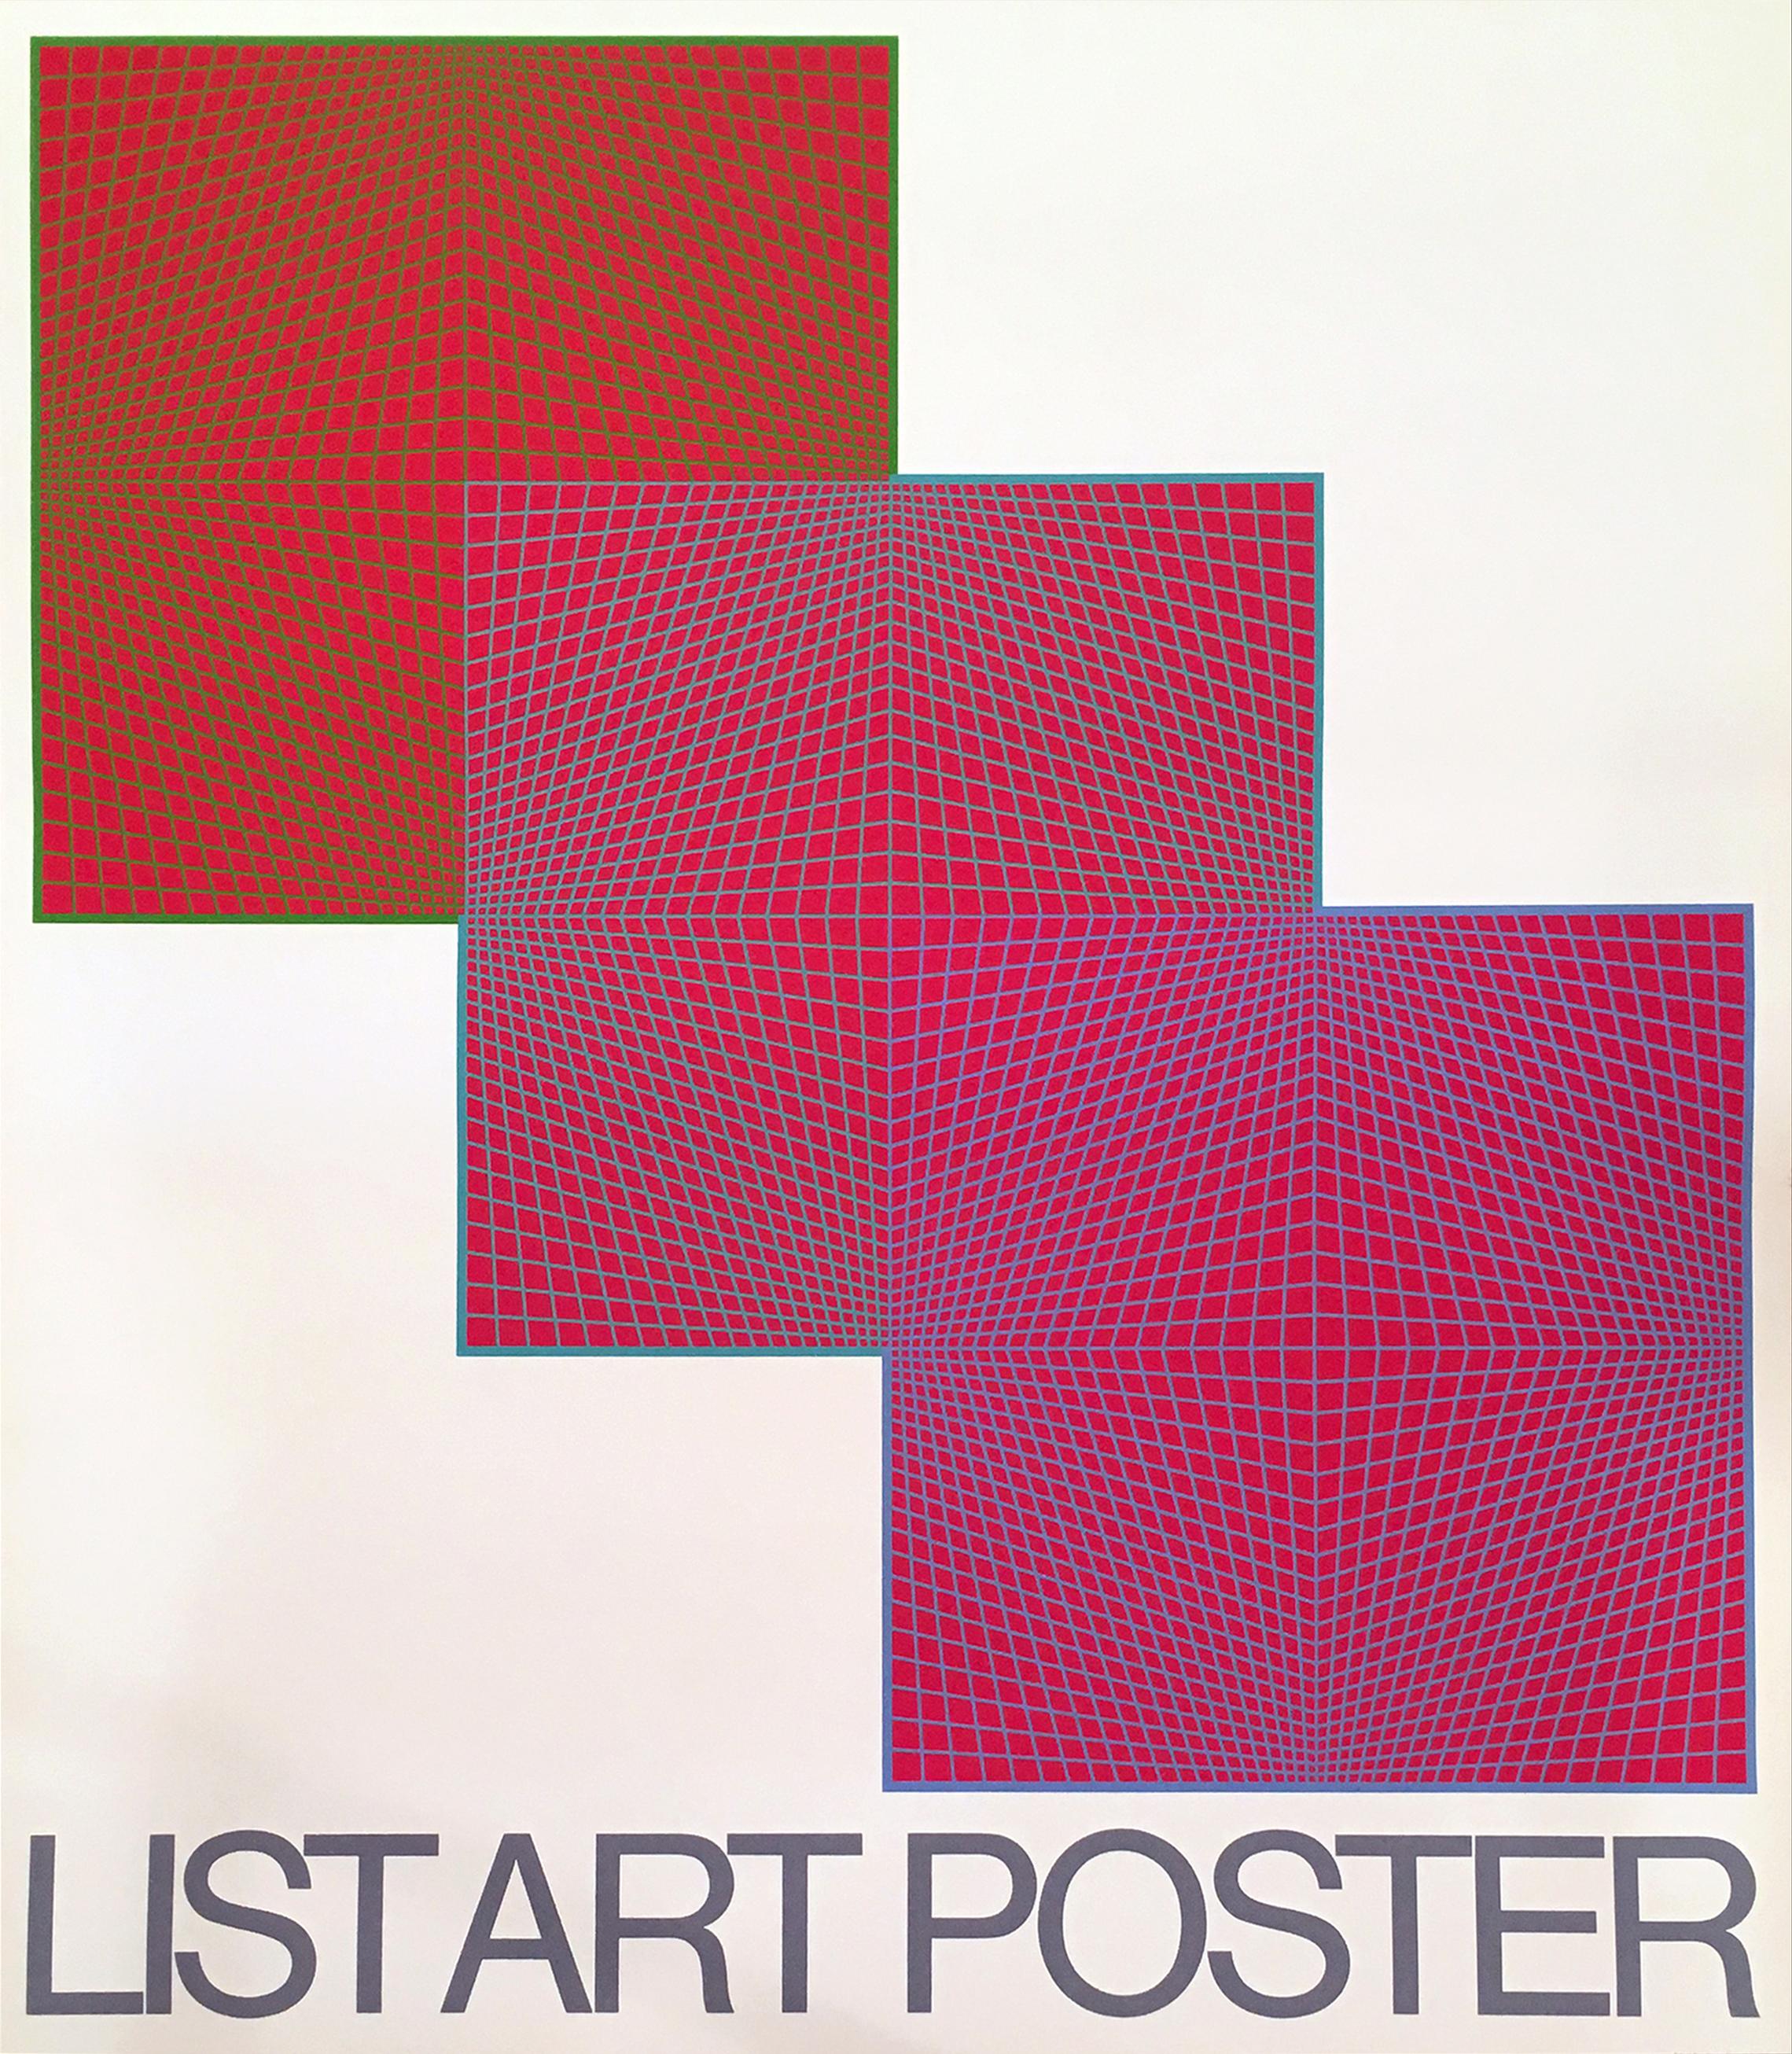 Richard Anuszkiewicz Abstract Print - "List Art Poster"